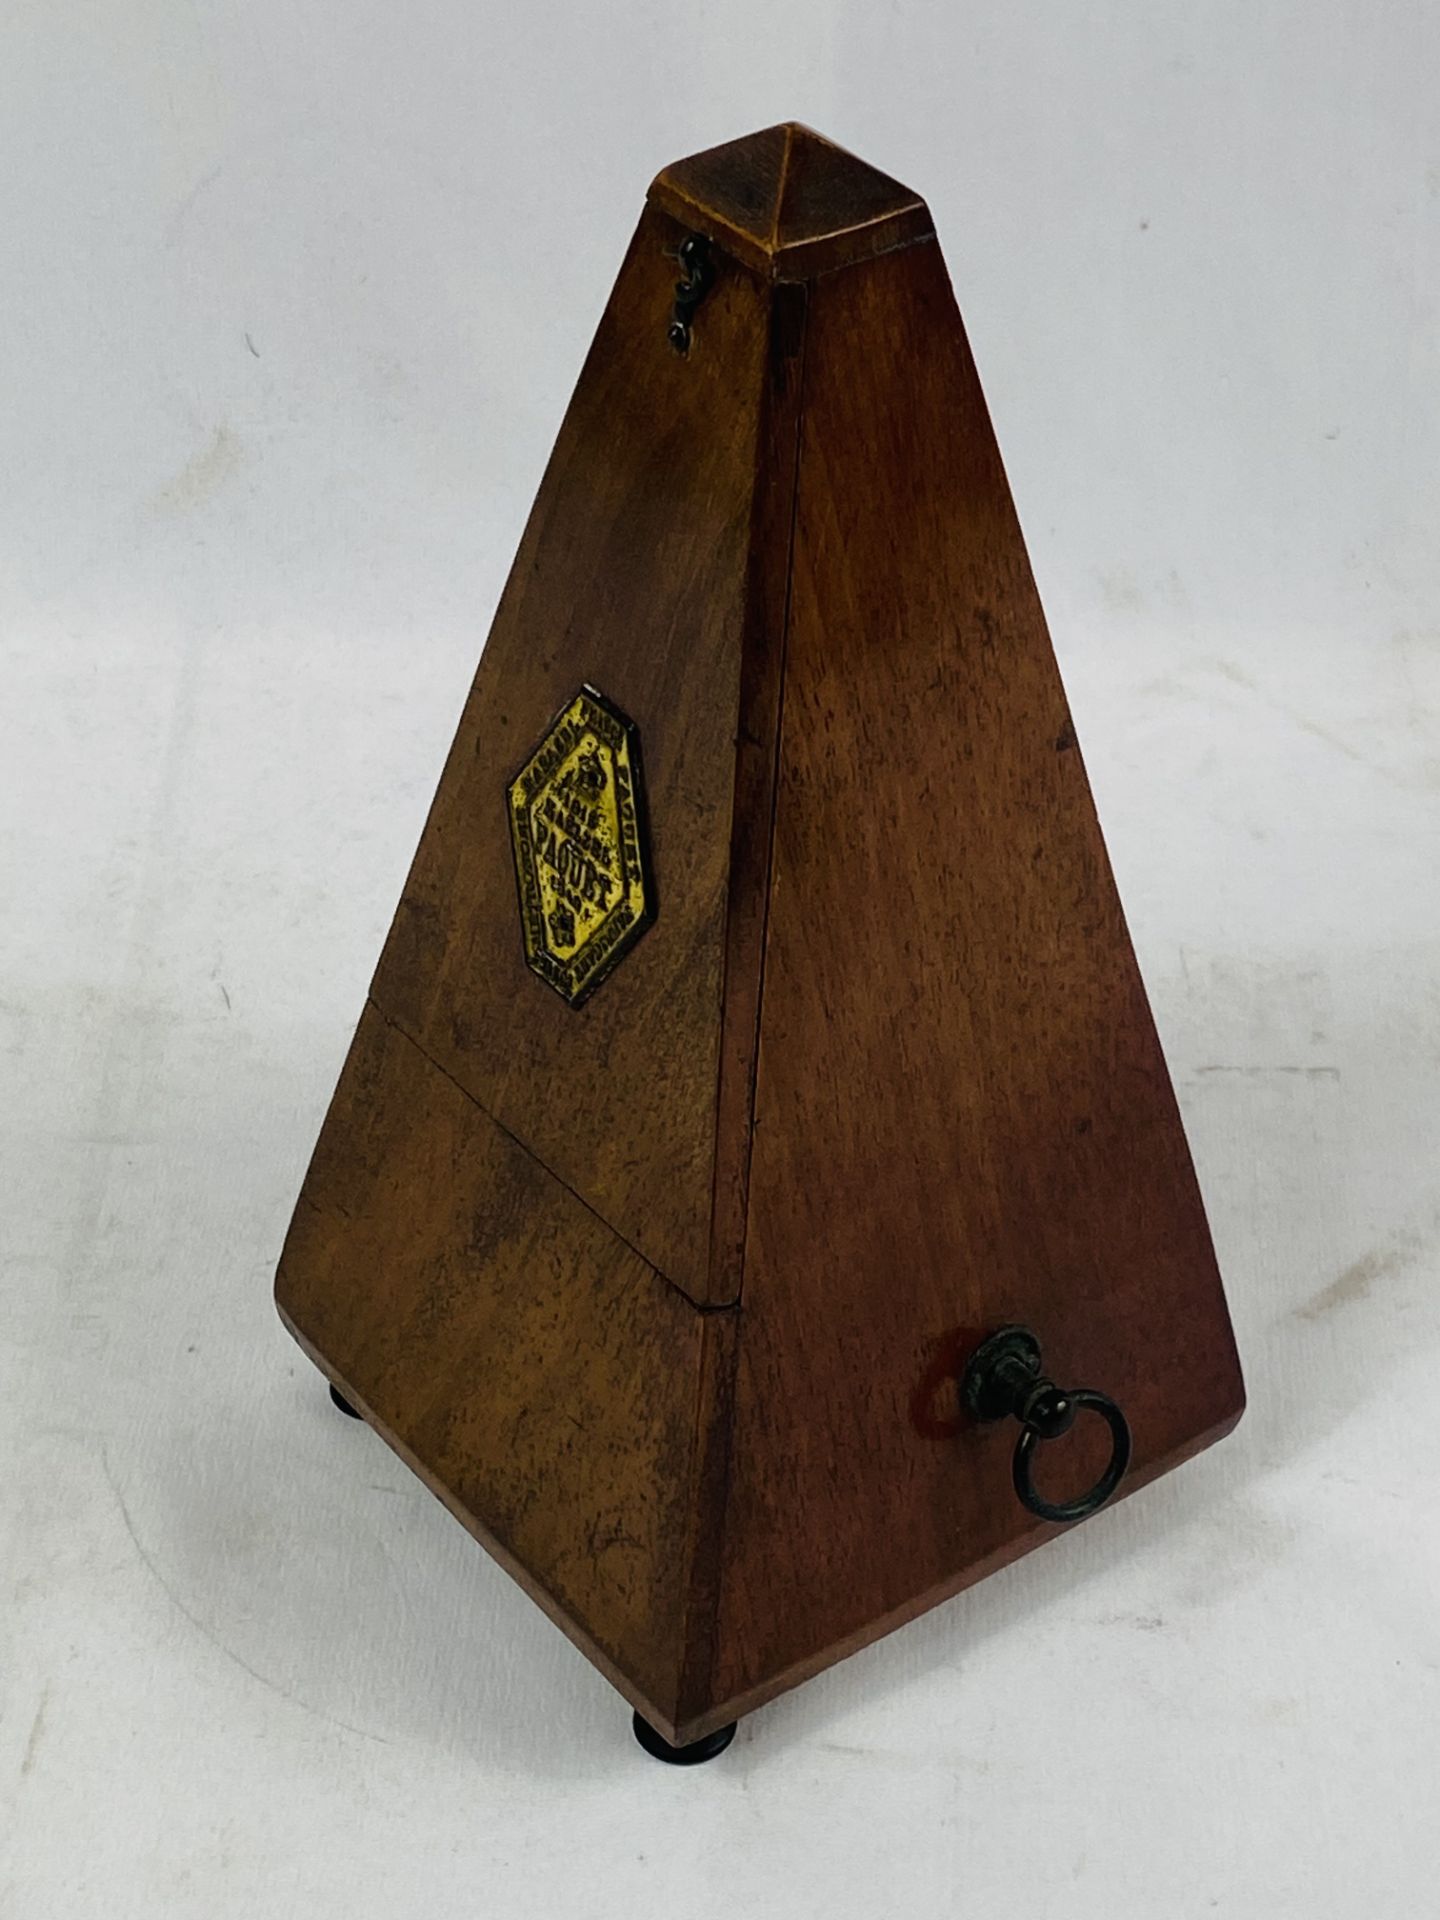 Paquet clockwork metronome - Image 4 of 6